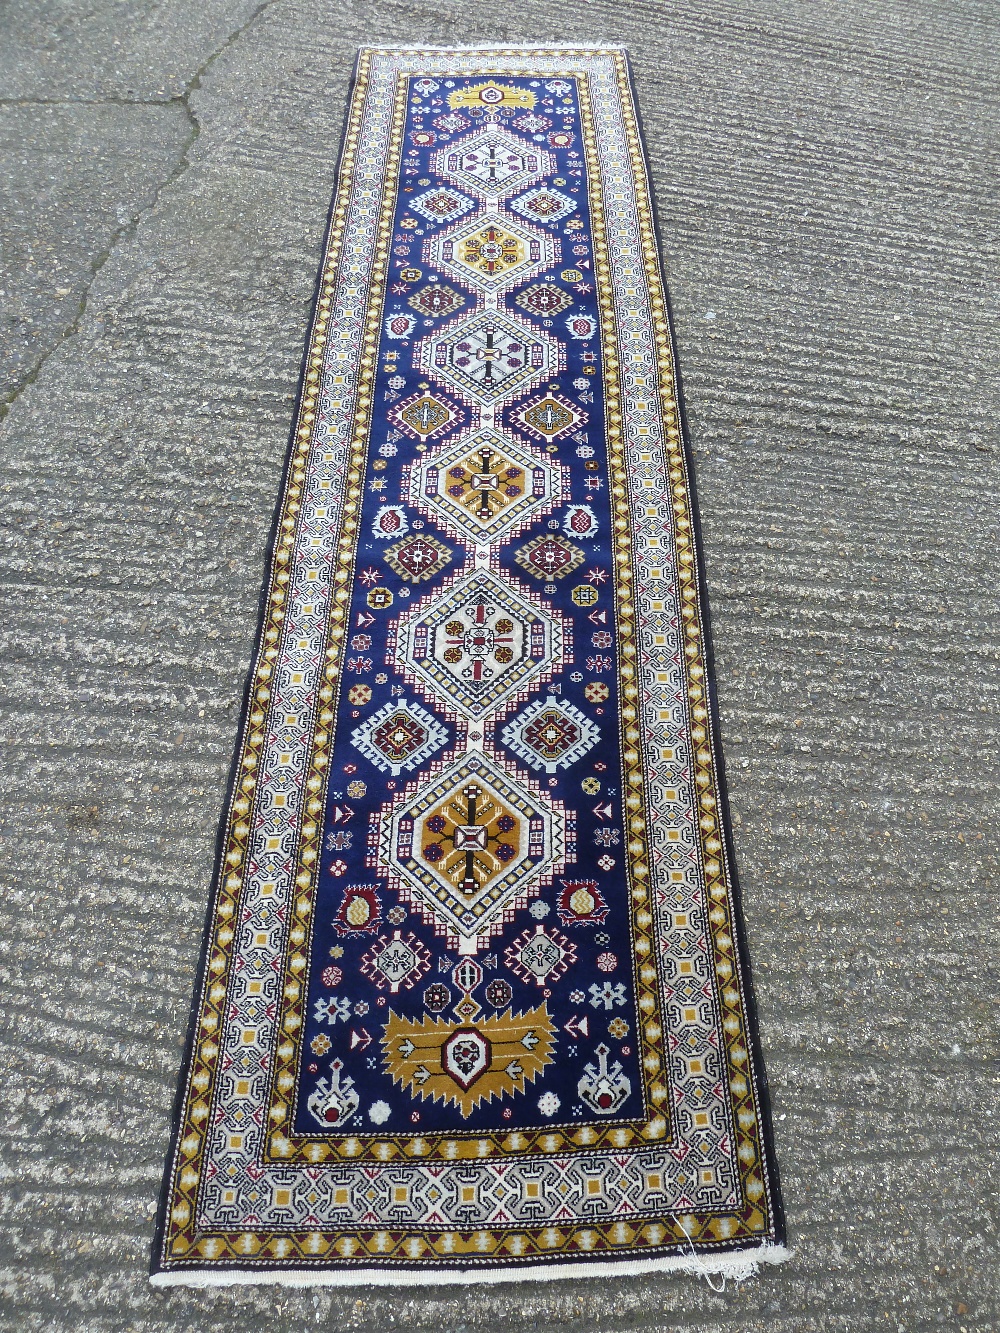 Persian wool runner, geometric repeating patterns against a dark blue ground, 296 x 78cm